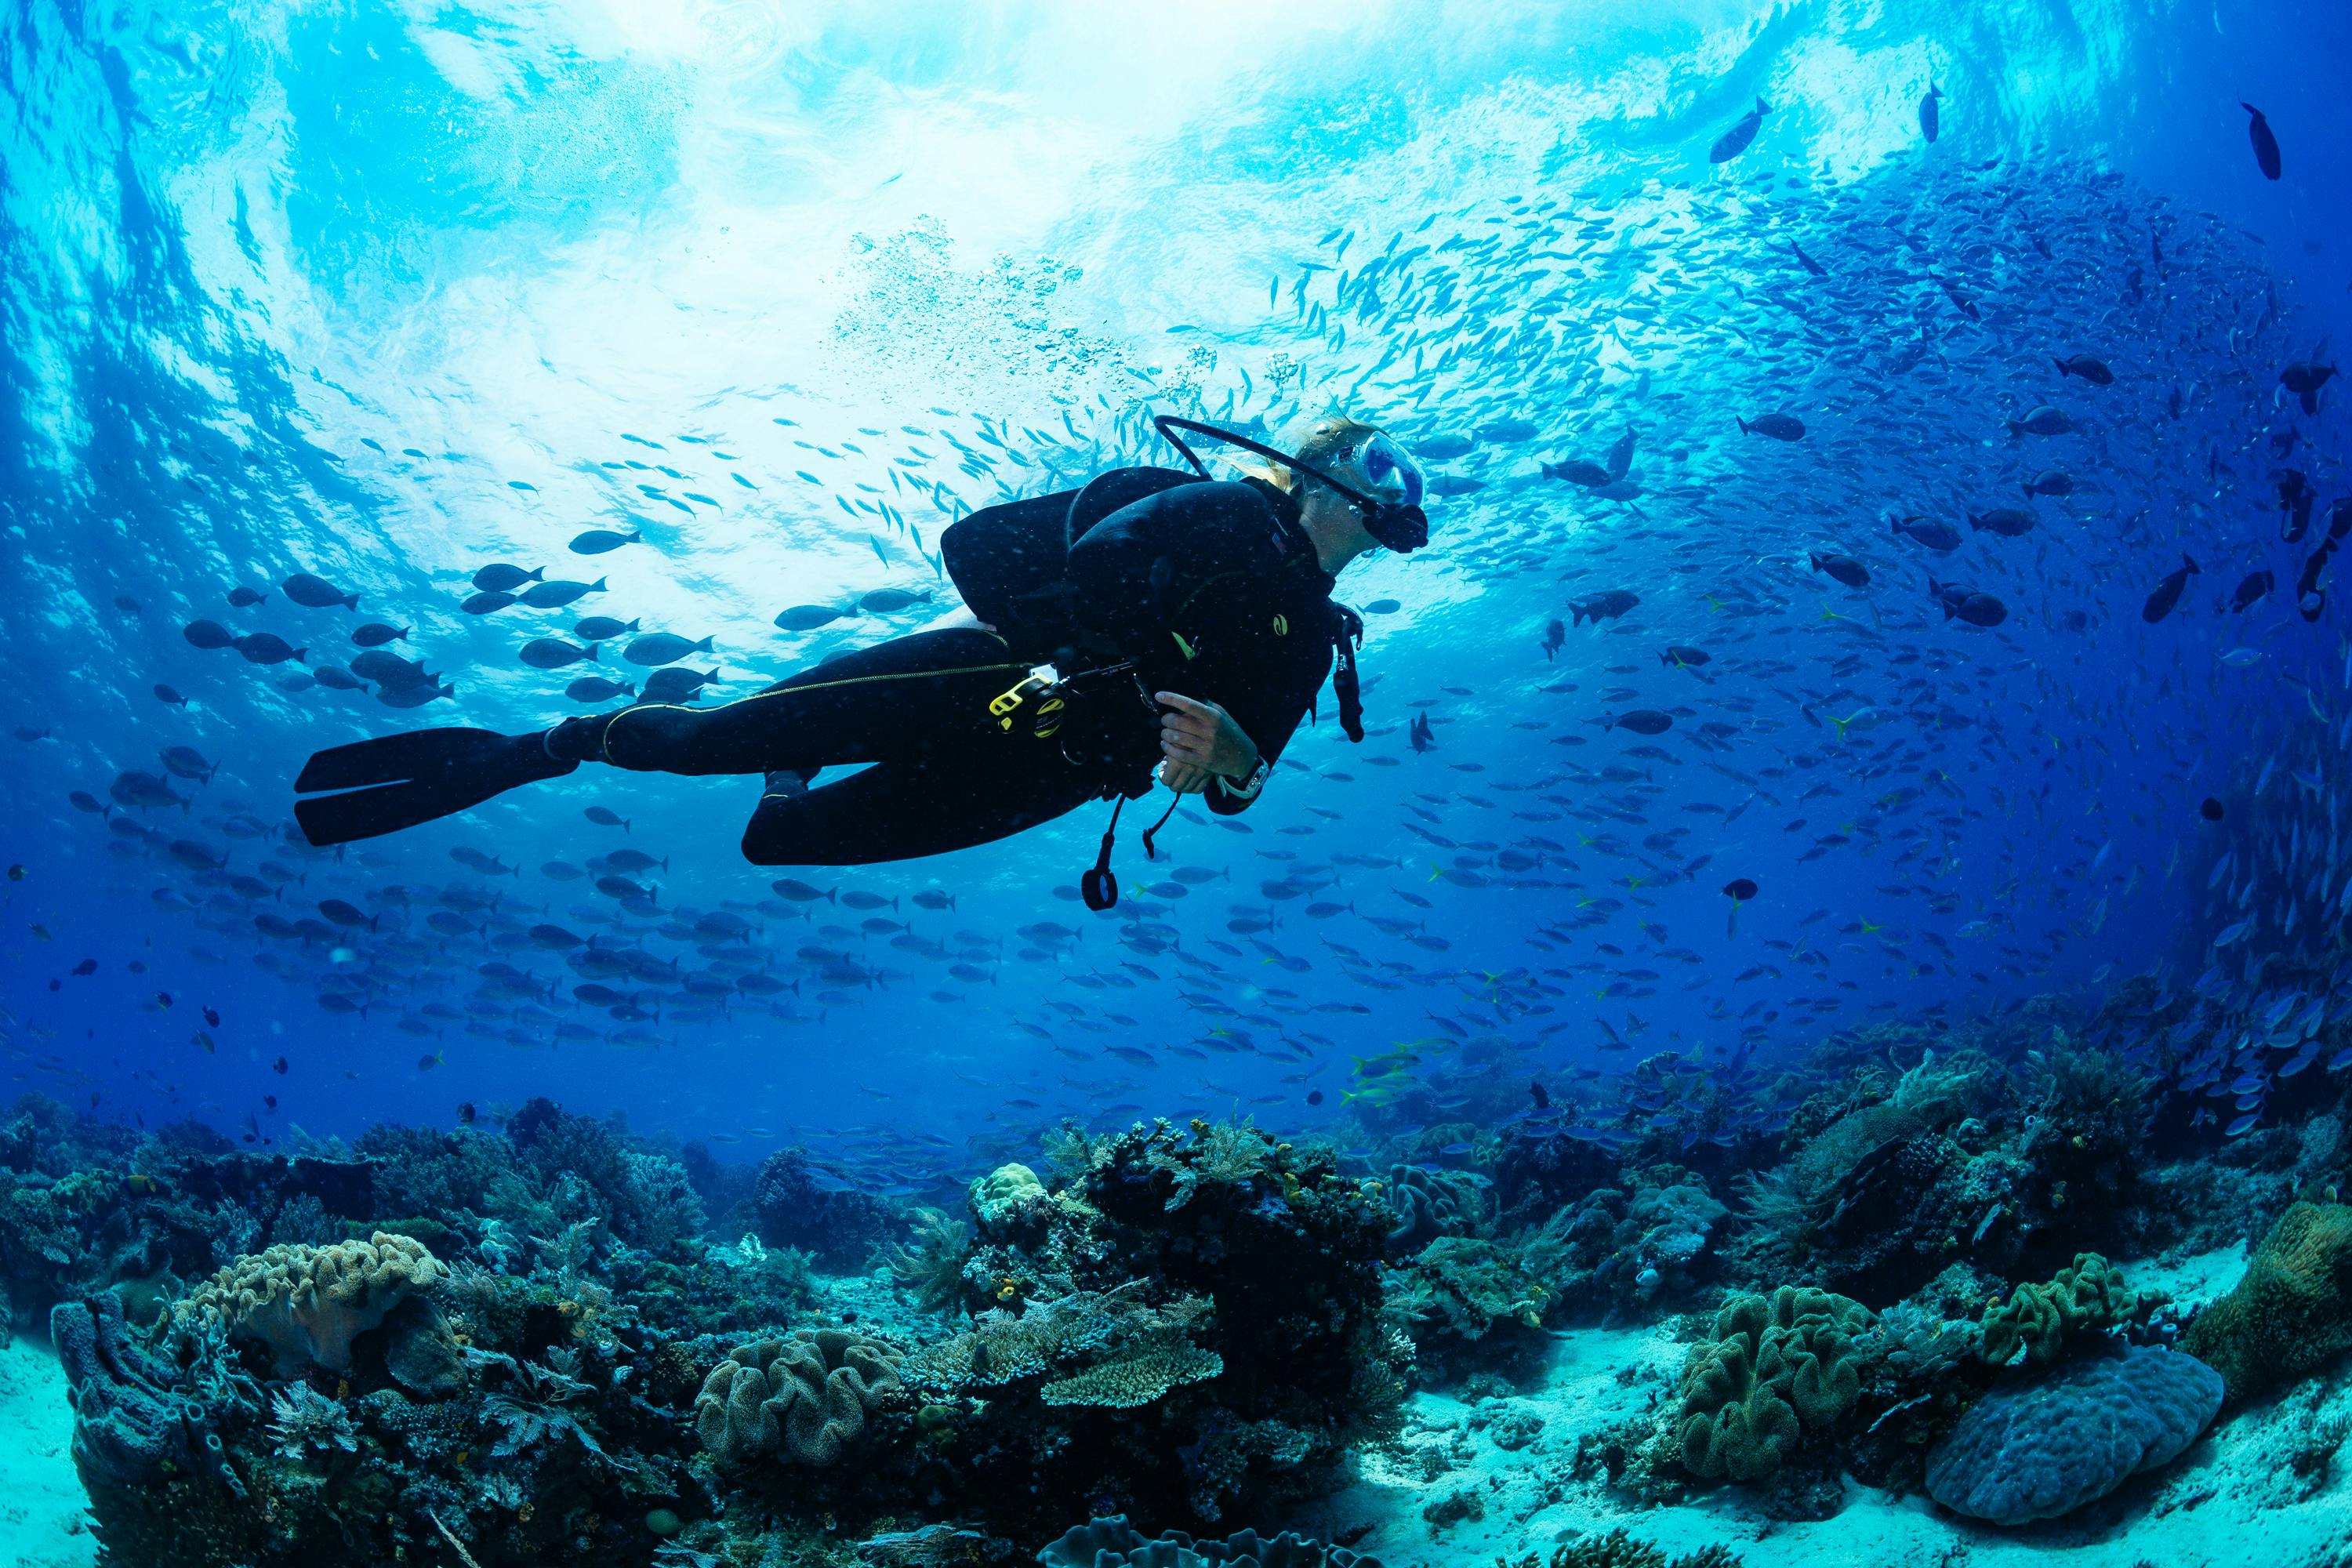 Zanzibar diving experiences from the North coast